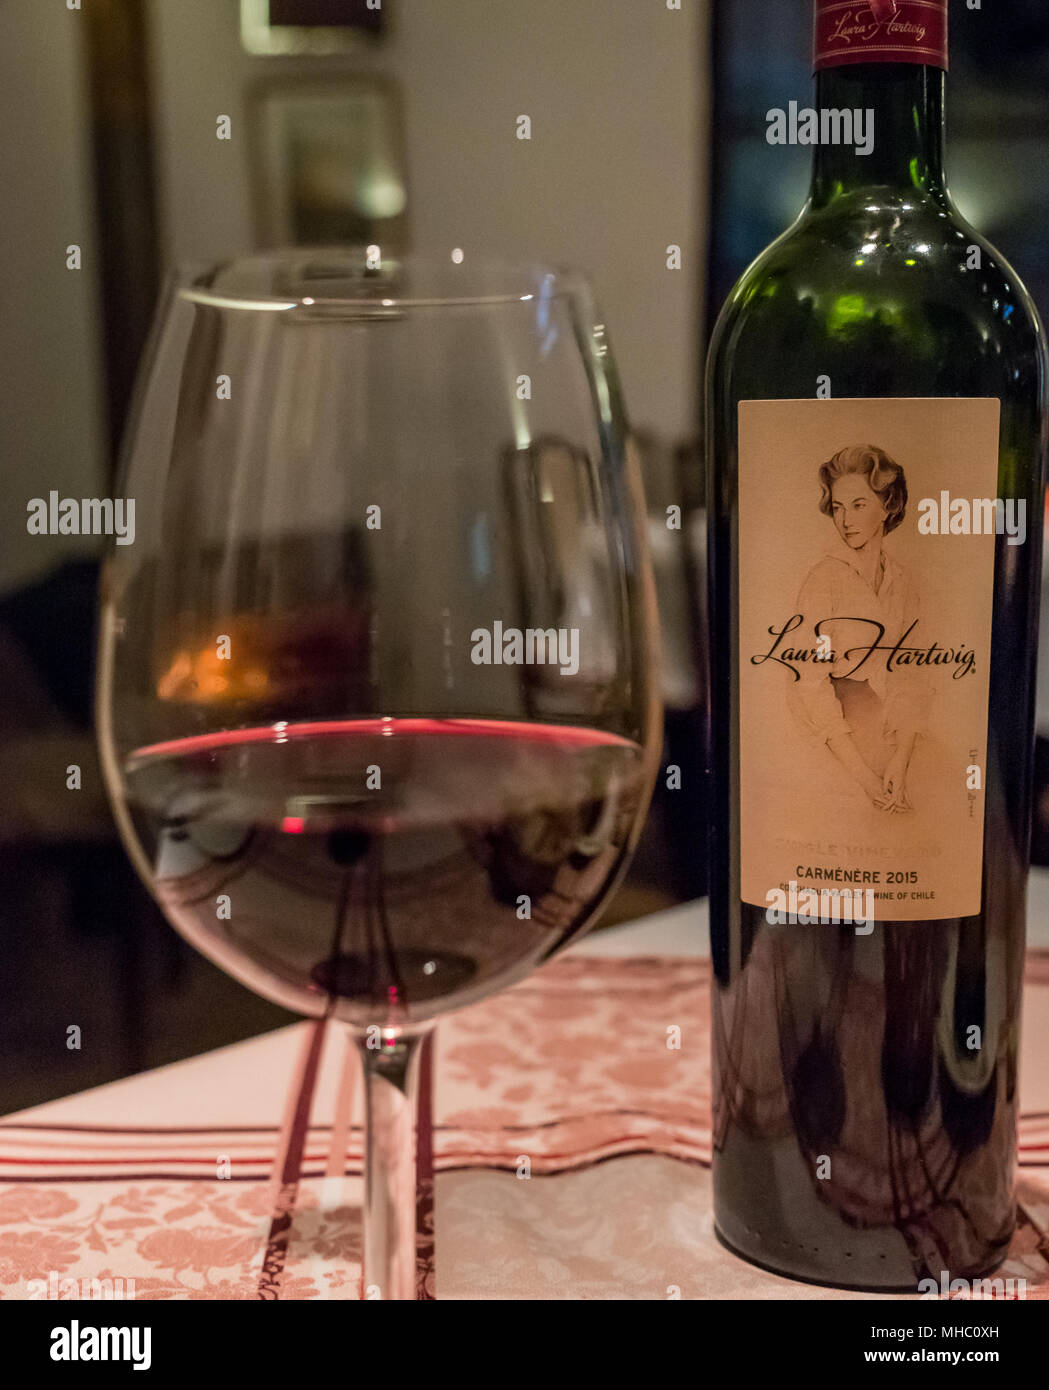 Wine glass and bottle of Laura Hartwig Caminere 2015 red wine, Italian restaurant, Santa Cruz wine region, Colchagua Valley, Chile, South America Stock Photo